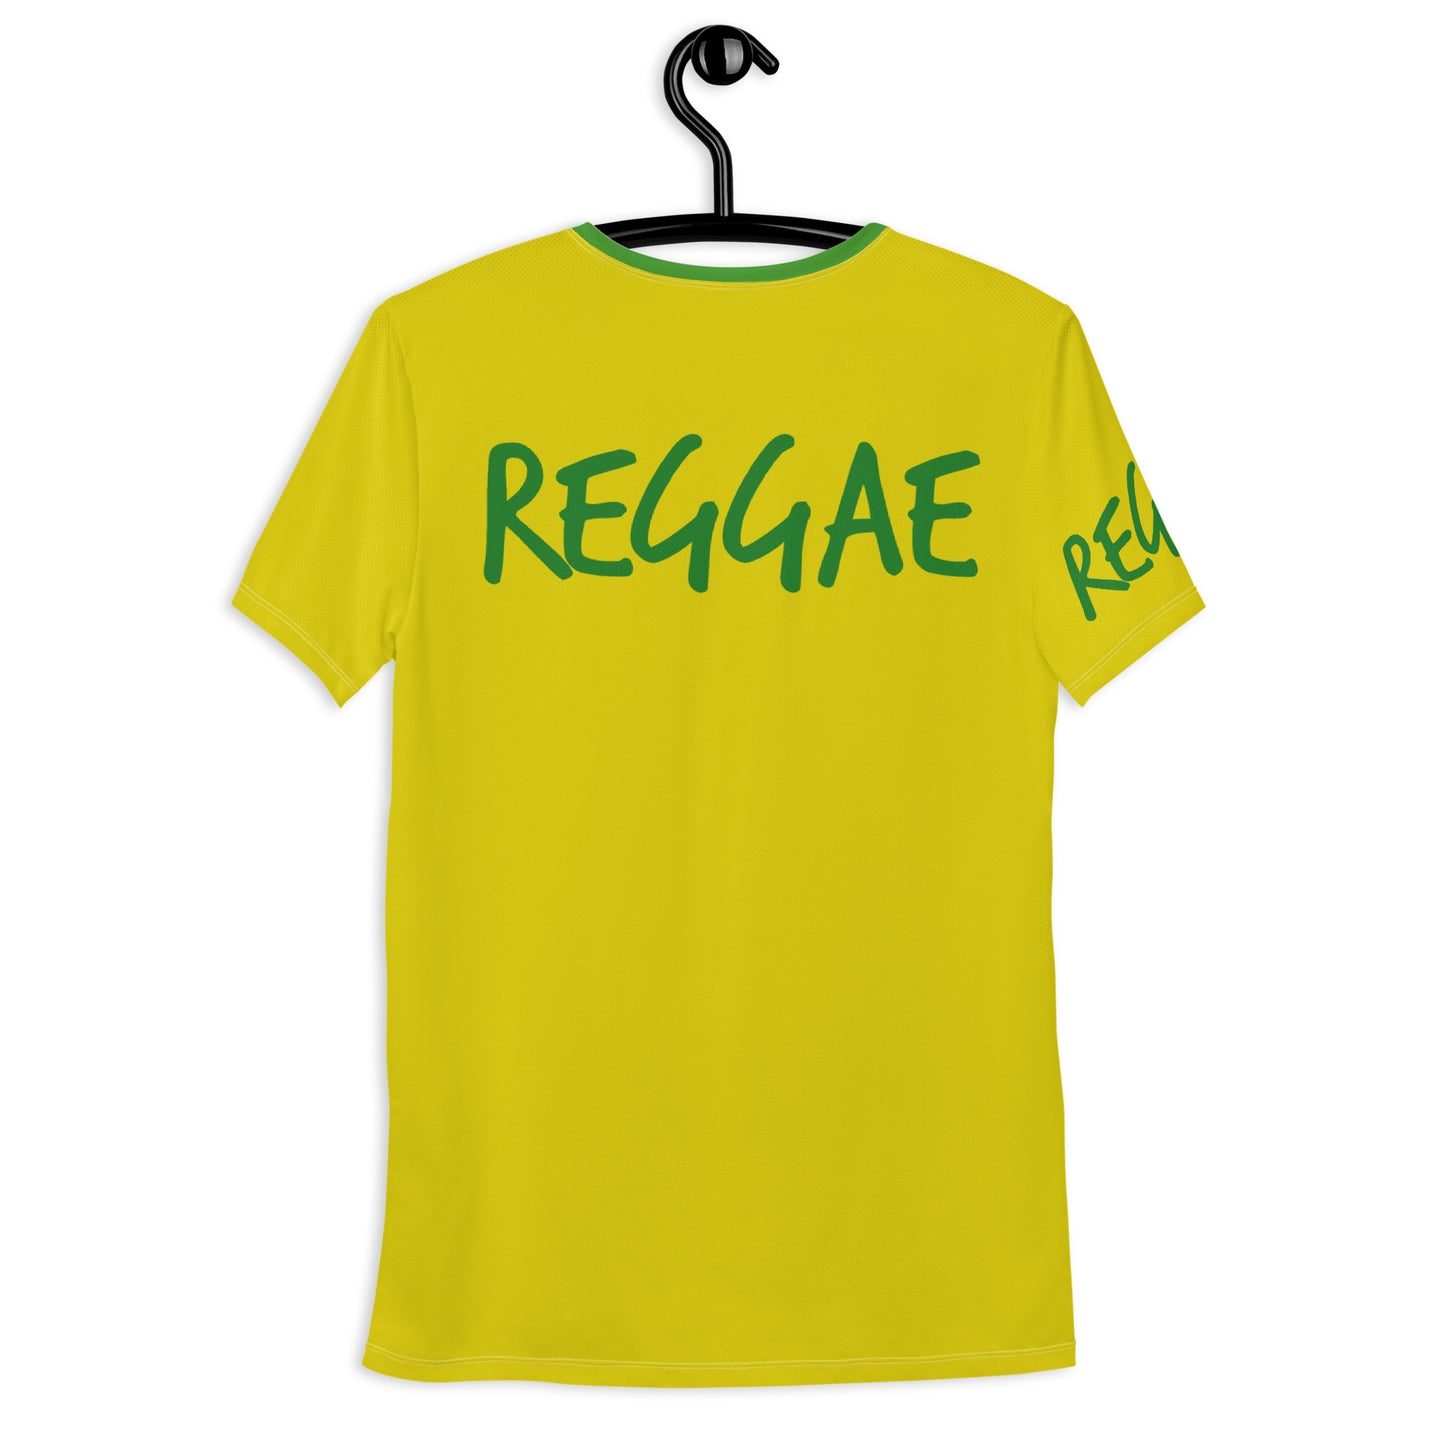 Reggae Paati - Men's Athletic T-shirt